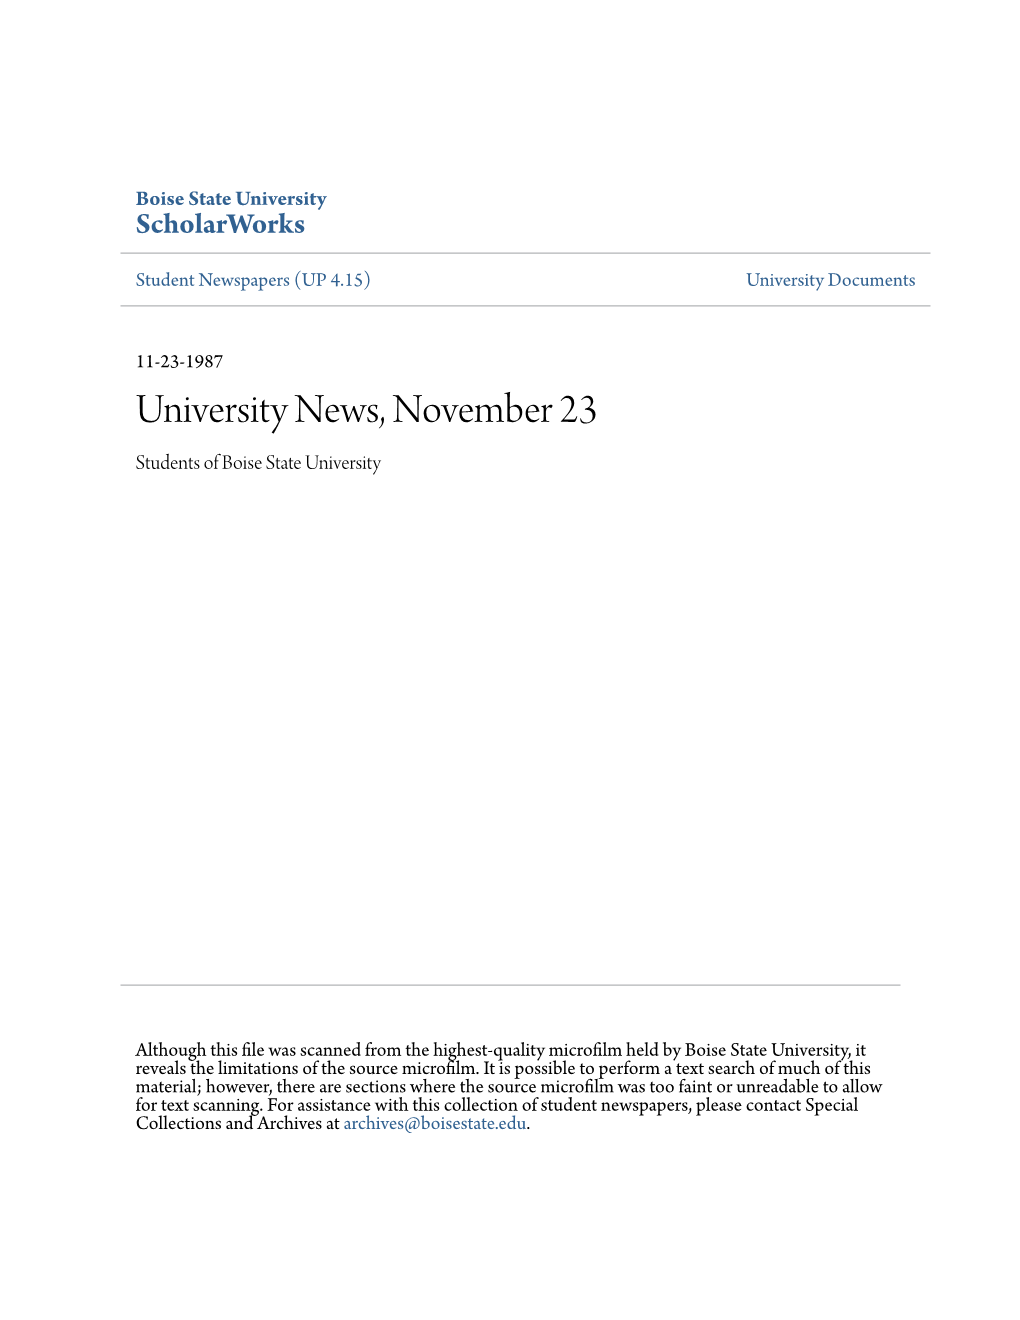 University News, November 23 Students of Boise State University